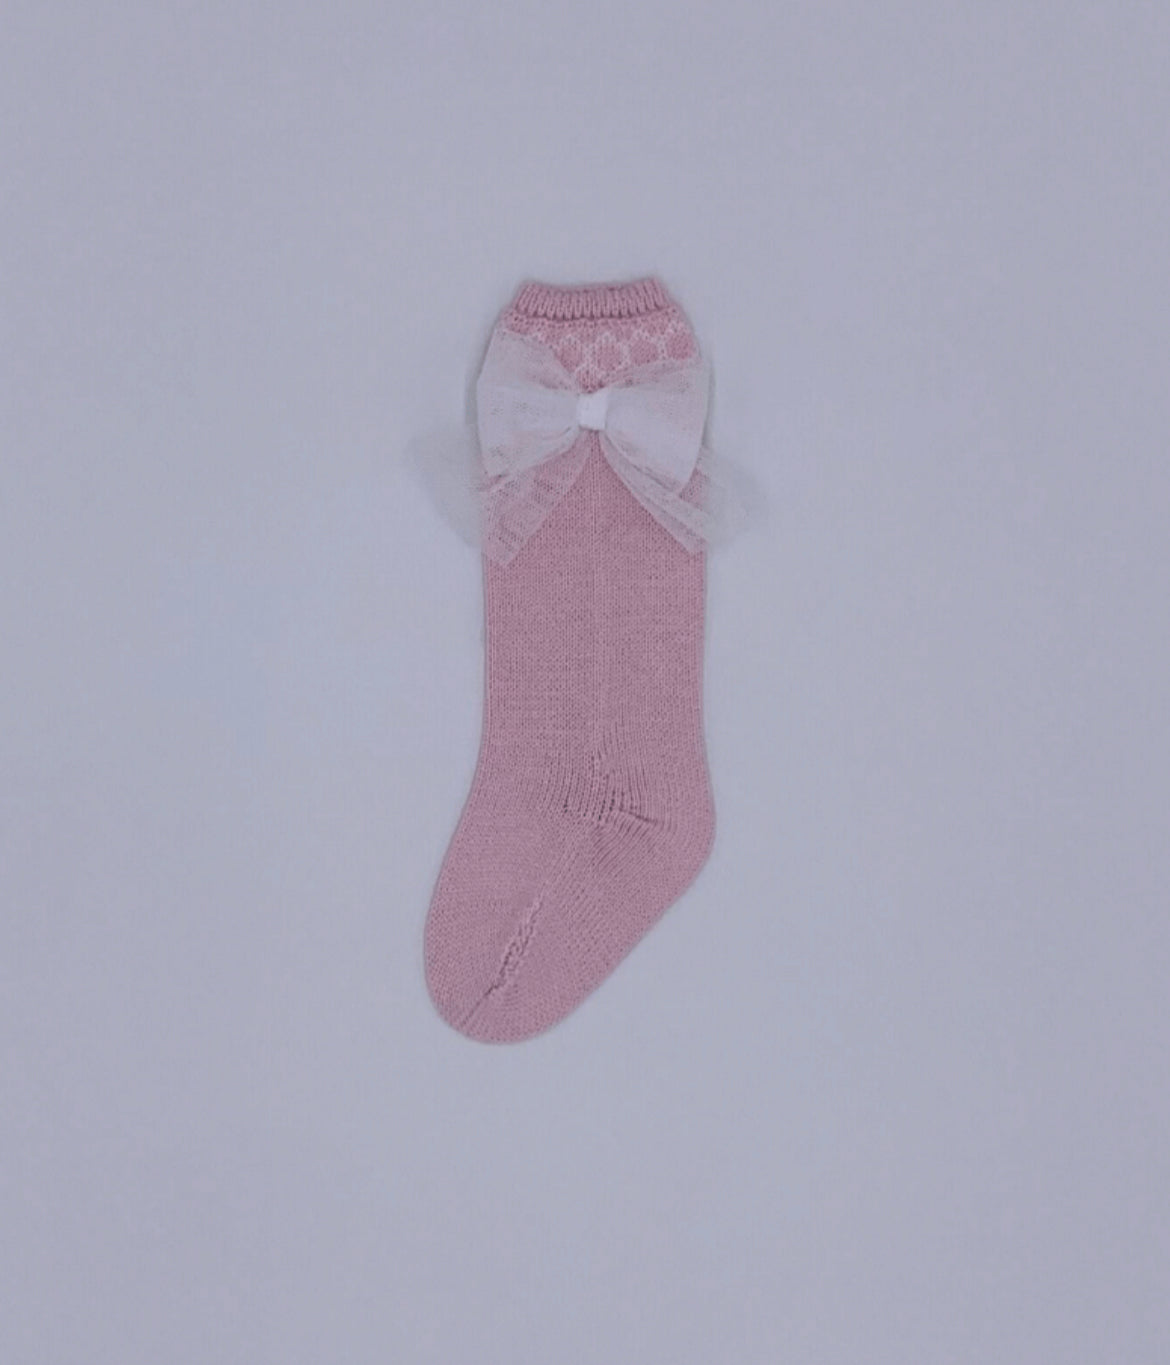 Rahigo SS23 Bow socks in Pink/White - 23114